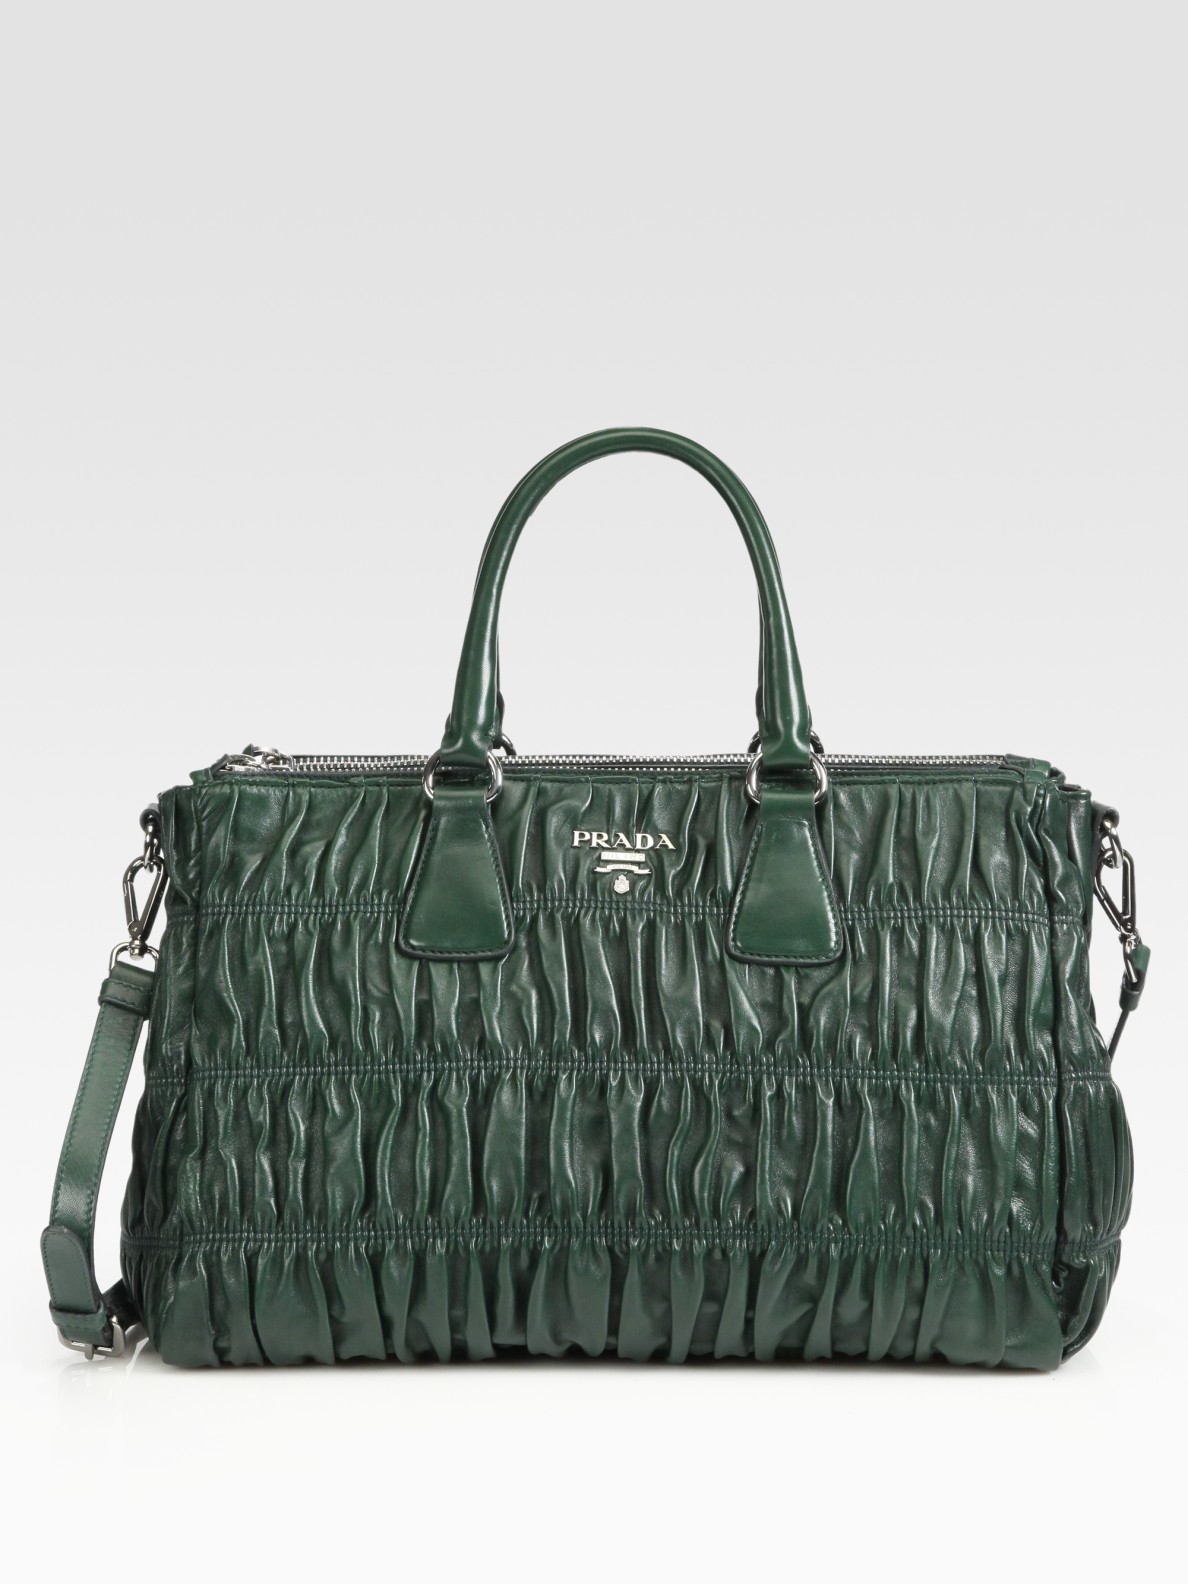 Prada Nappa Gaufre Shopping Bag in Green (emerald) | Lyst  